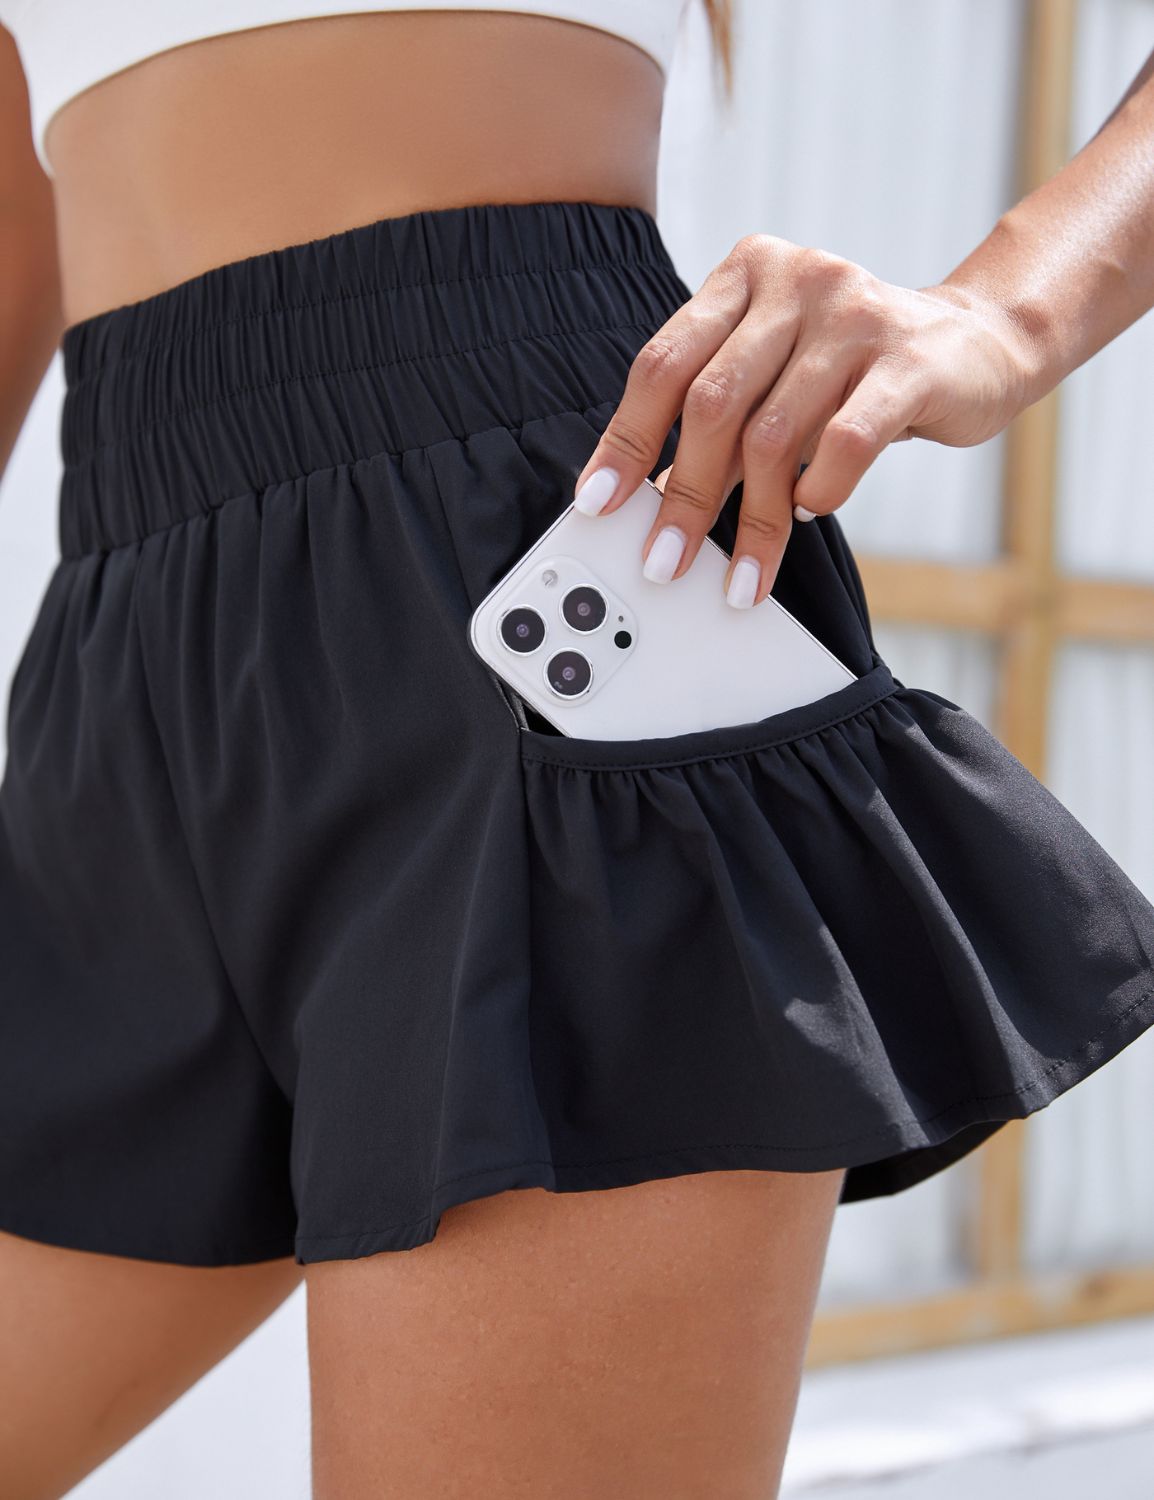 Flowy Running Shorts Tennis Skirt Casual Skort